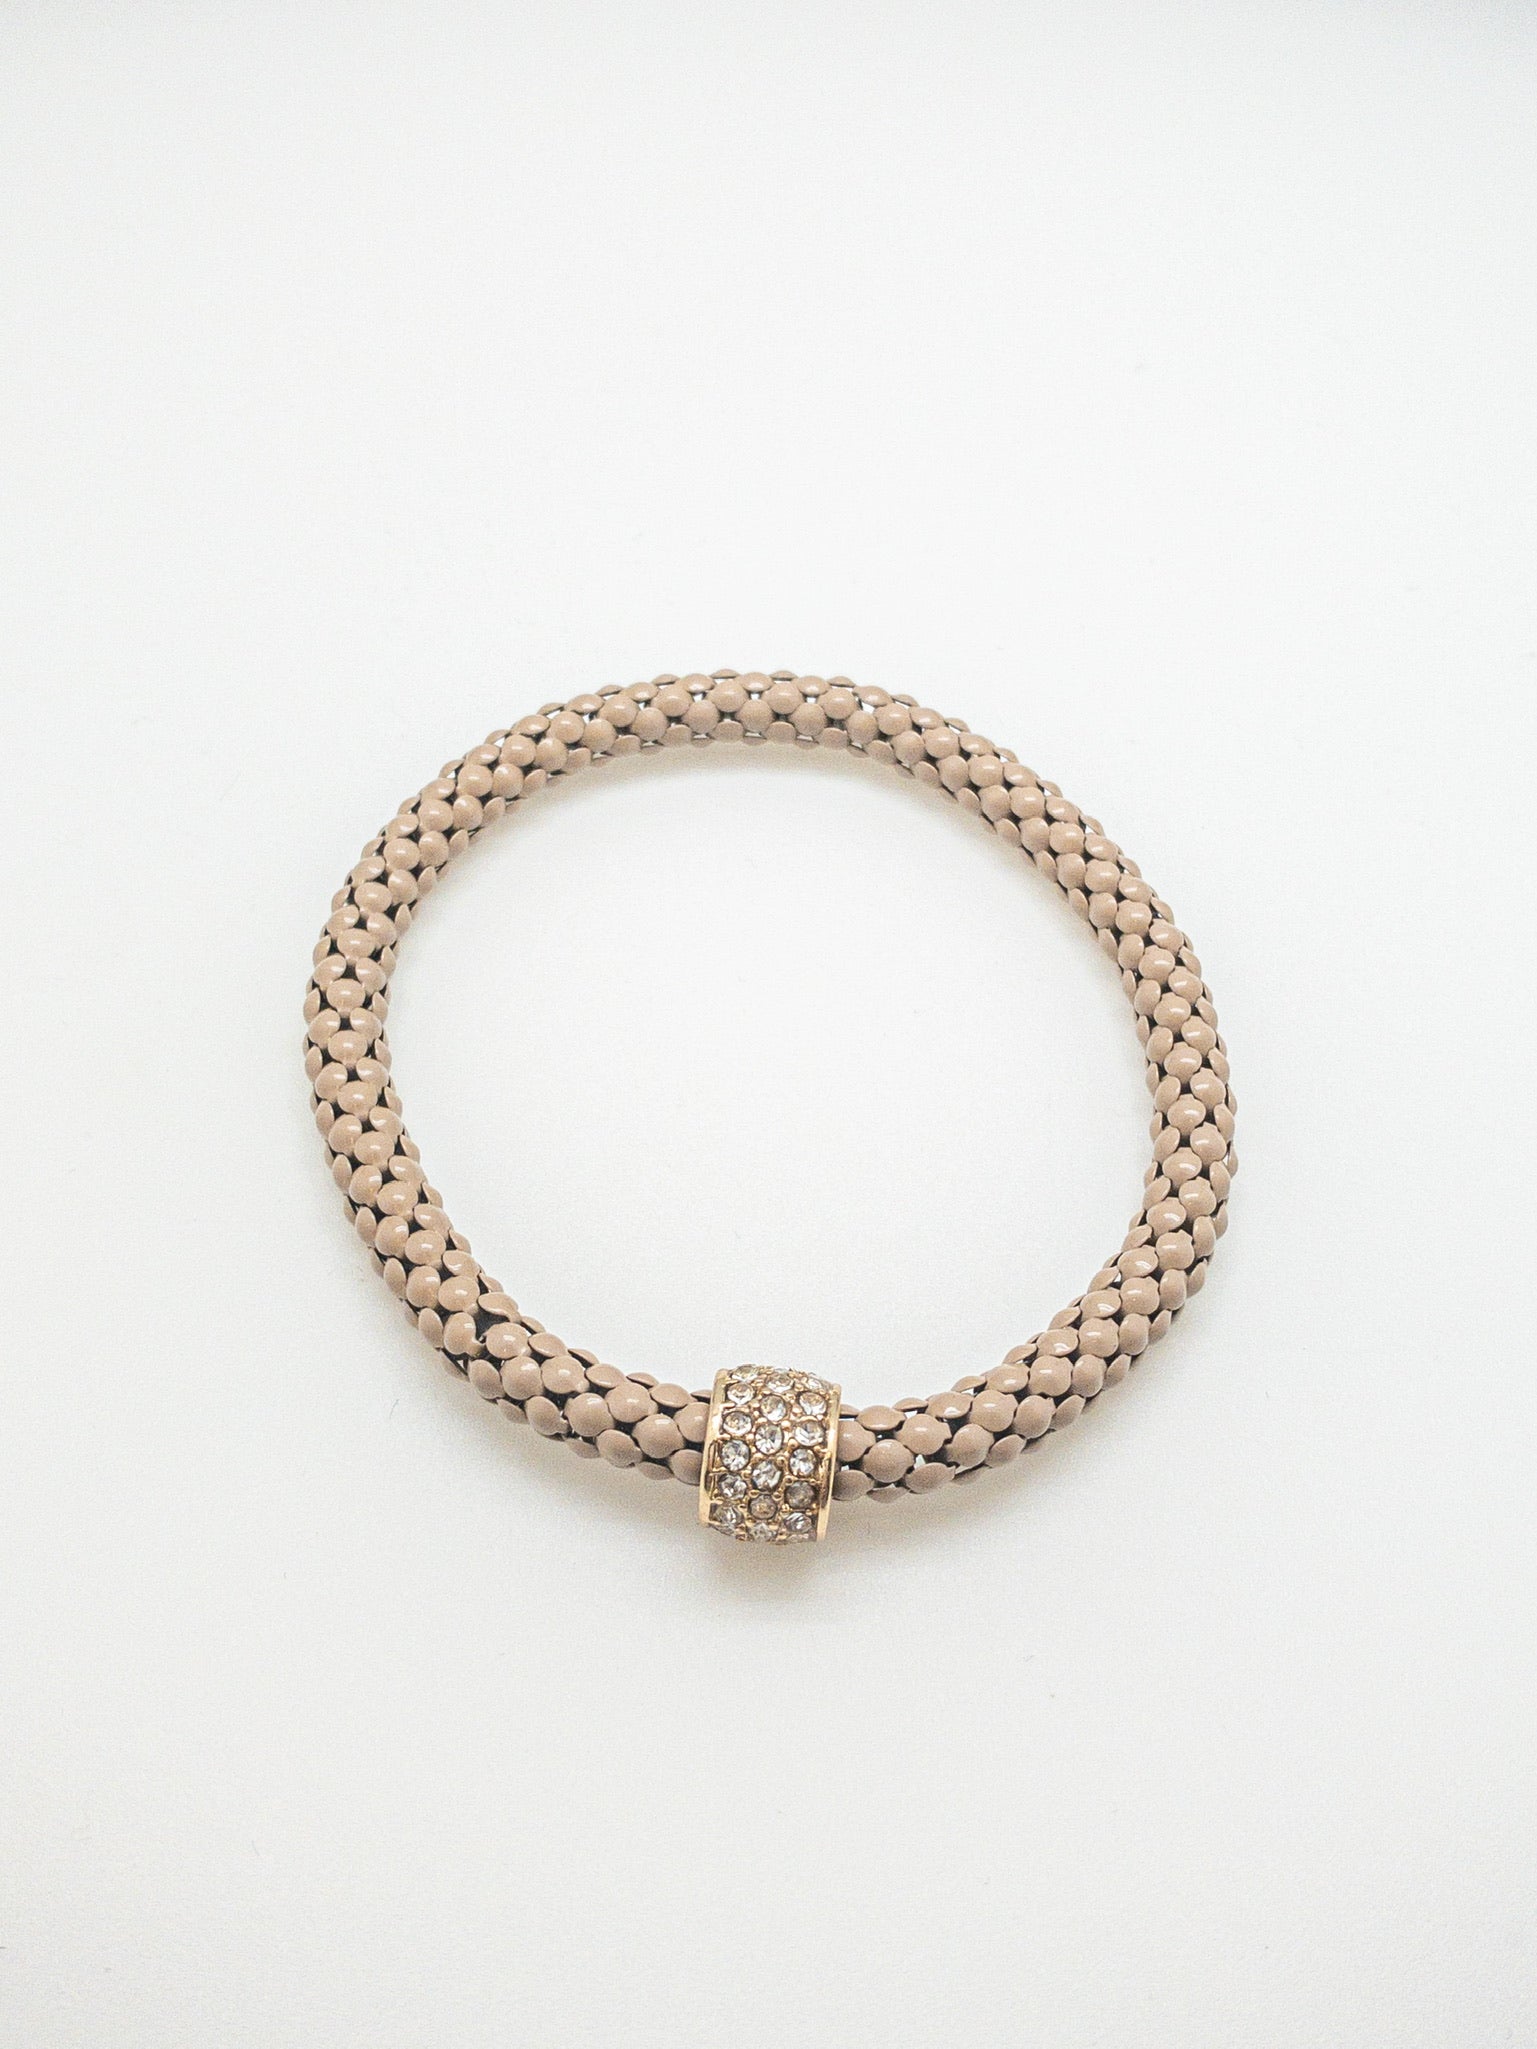 Scarlett taupe bracelet, tan interlocking chain with charm